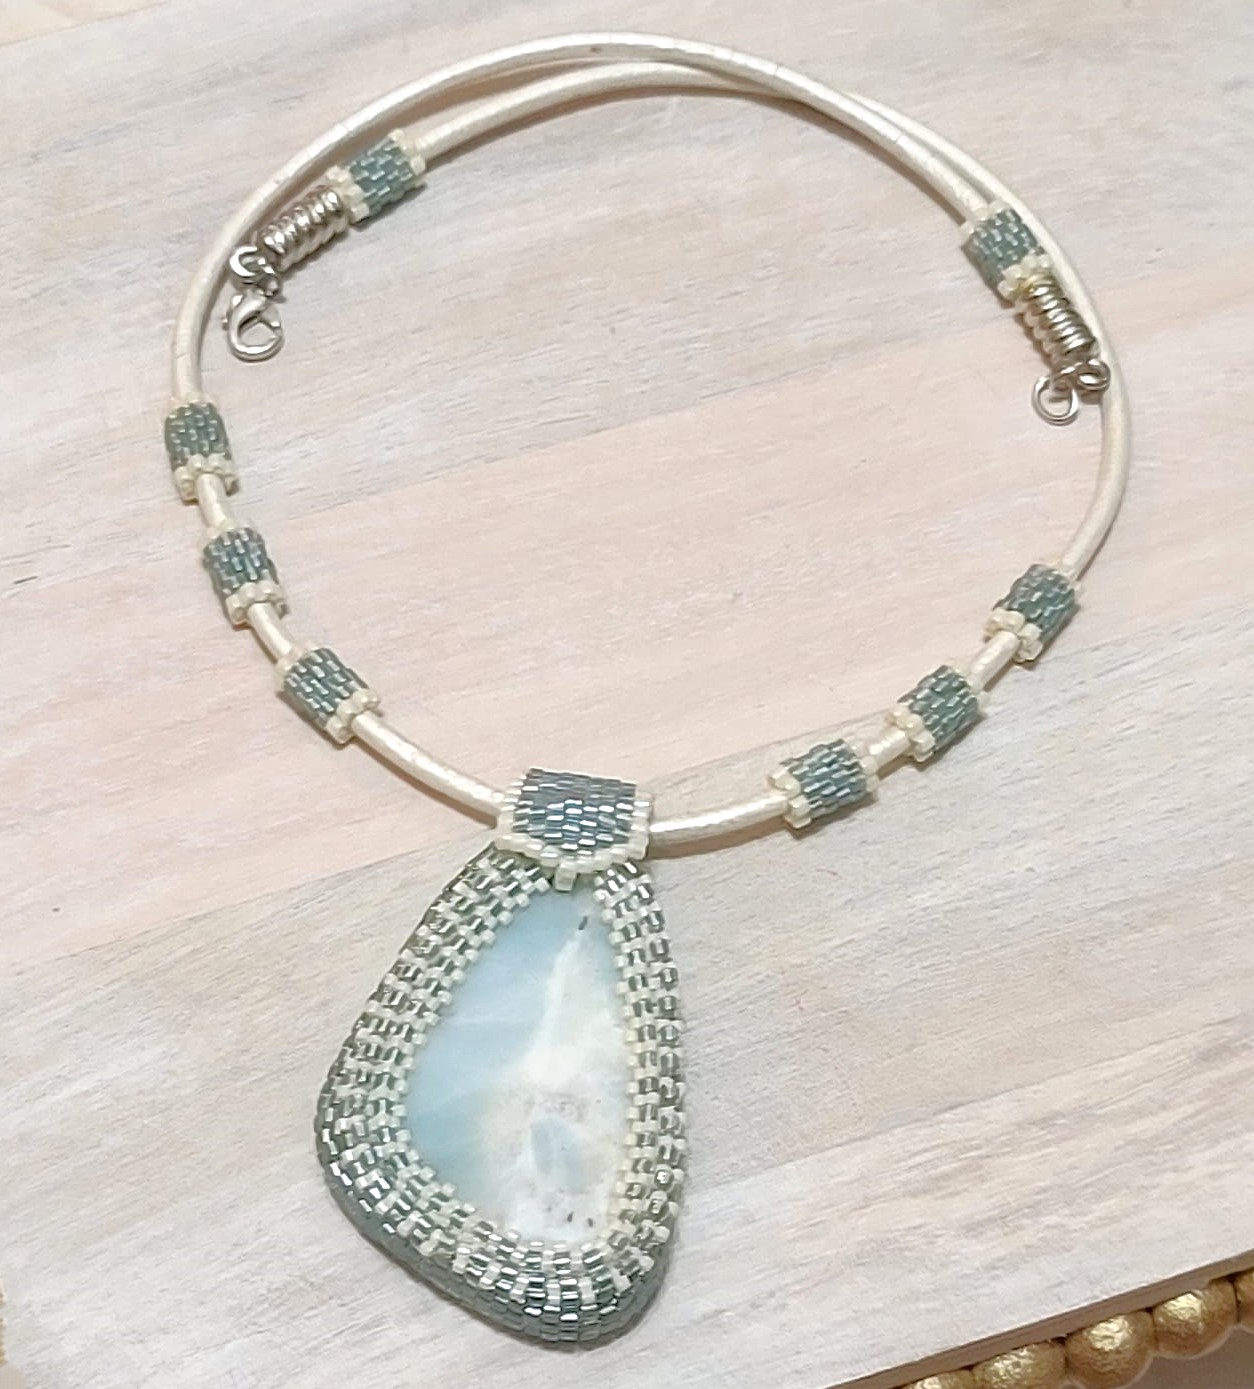 Amazonite gemstone pendant necklace with leather cord, miyuki glass, peyote stitch, handcrafted